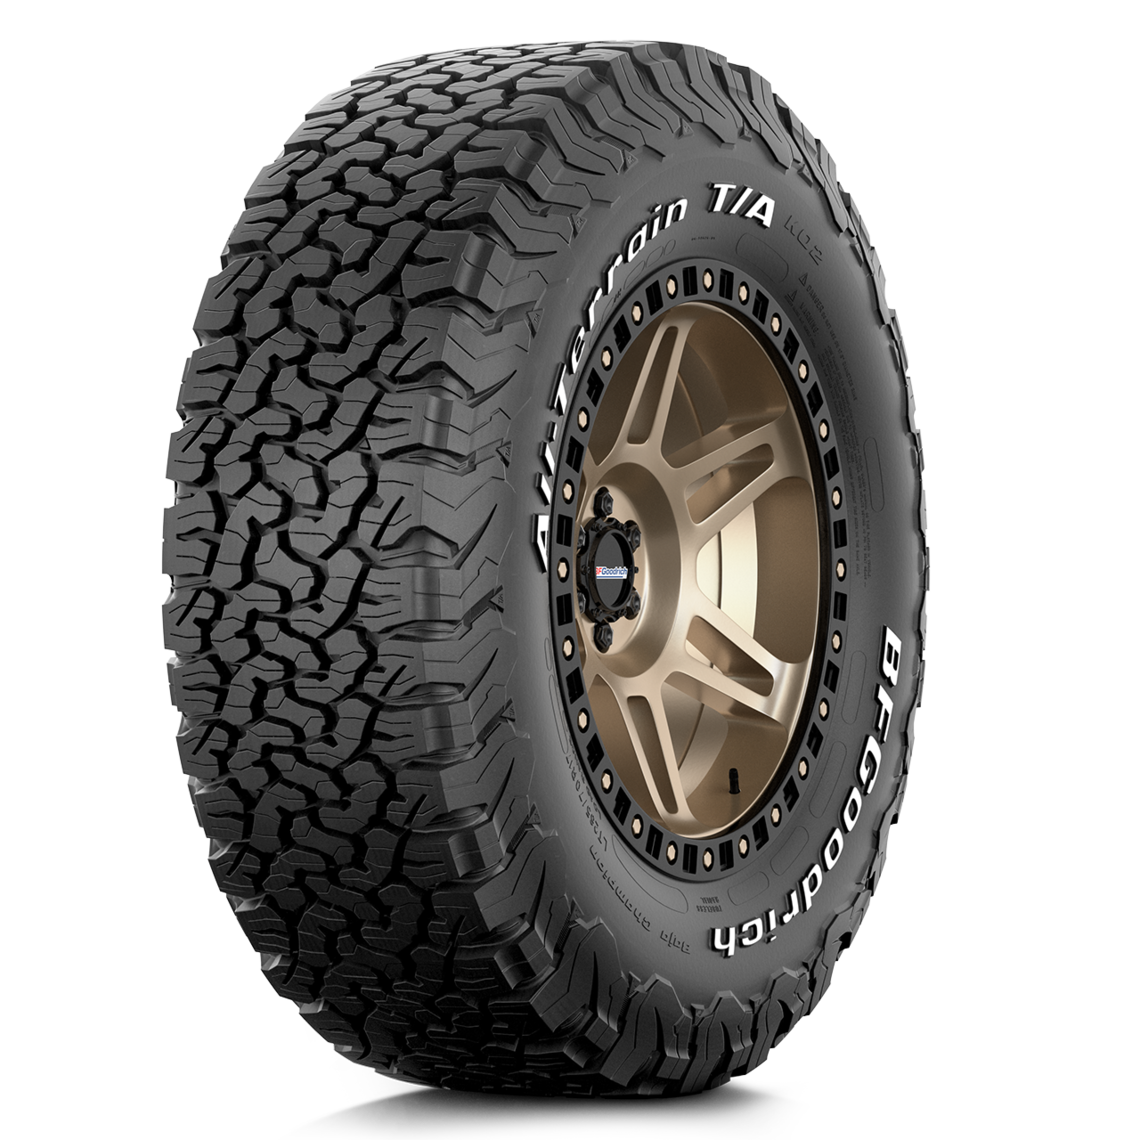 BFGoodrich All Terrain TA KO2 - Tire Reviews and Tests